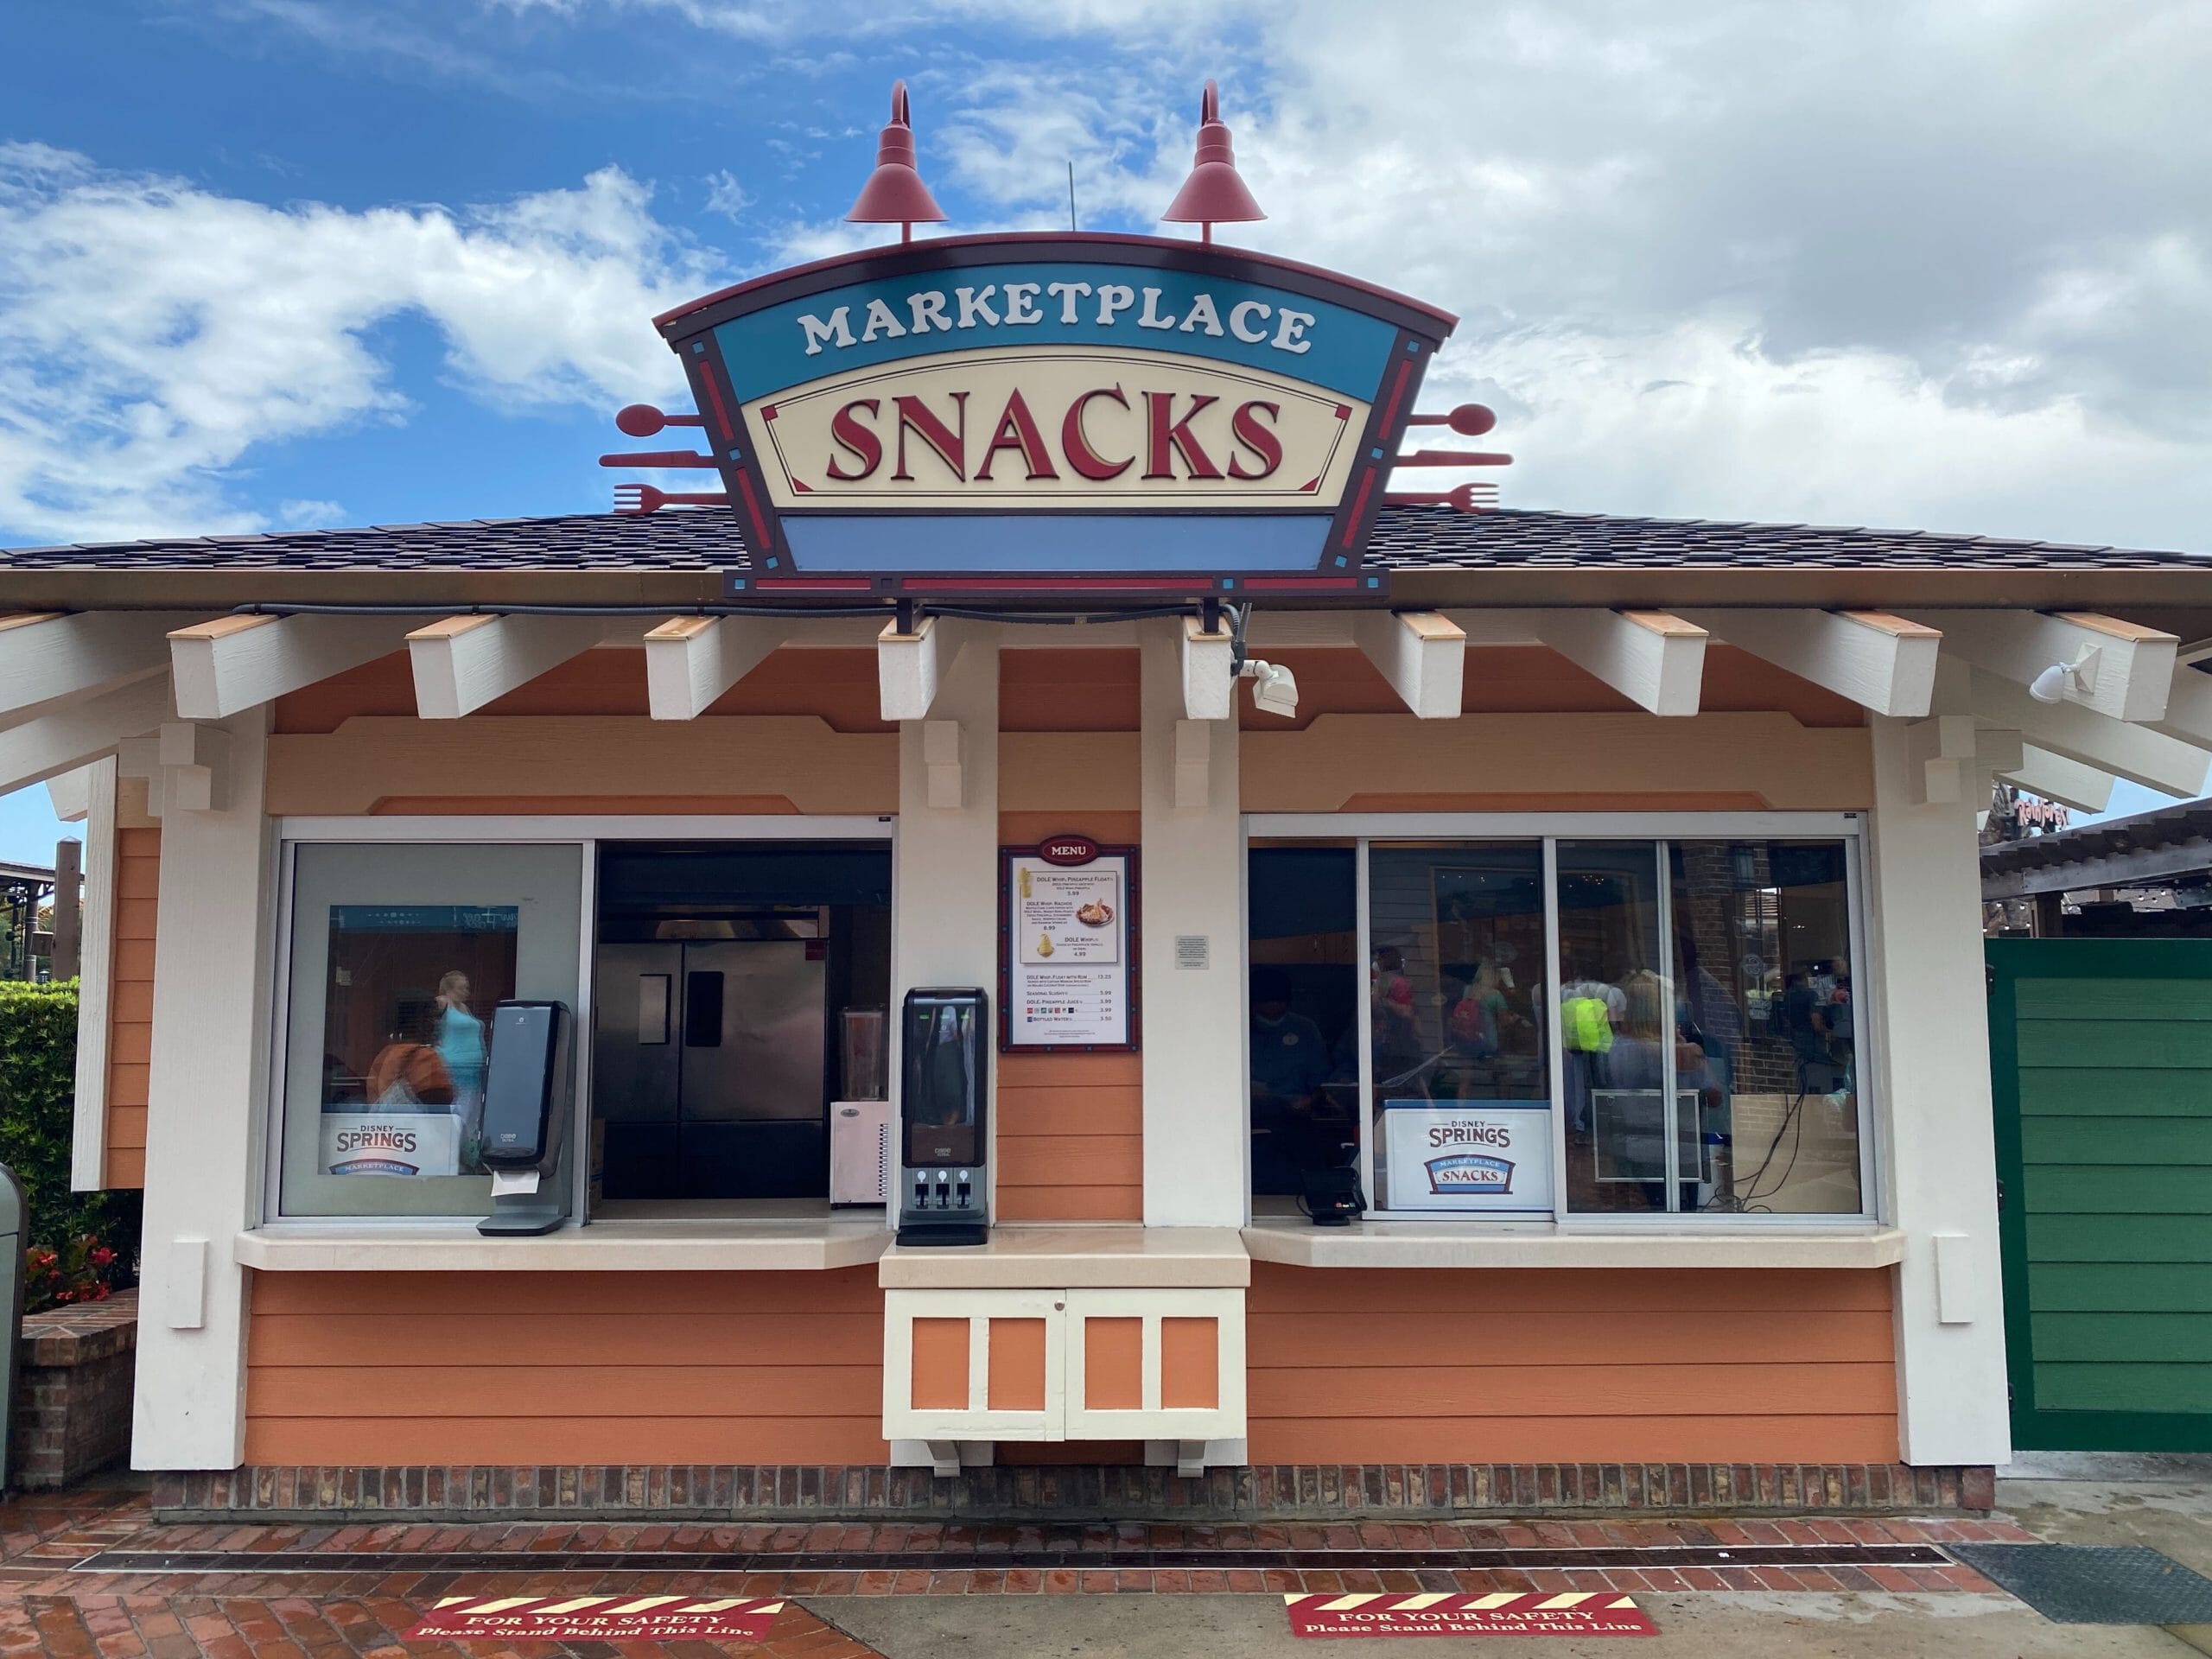 Marketplace Snacks at Disney Springs